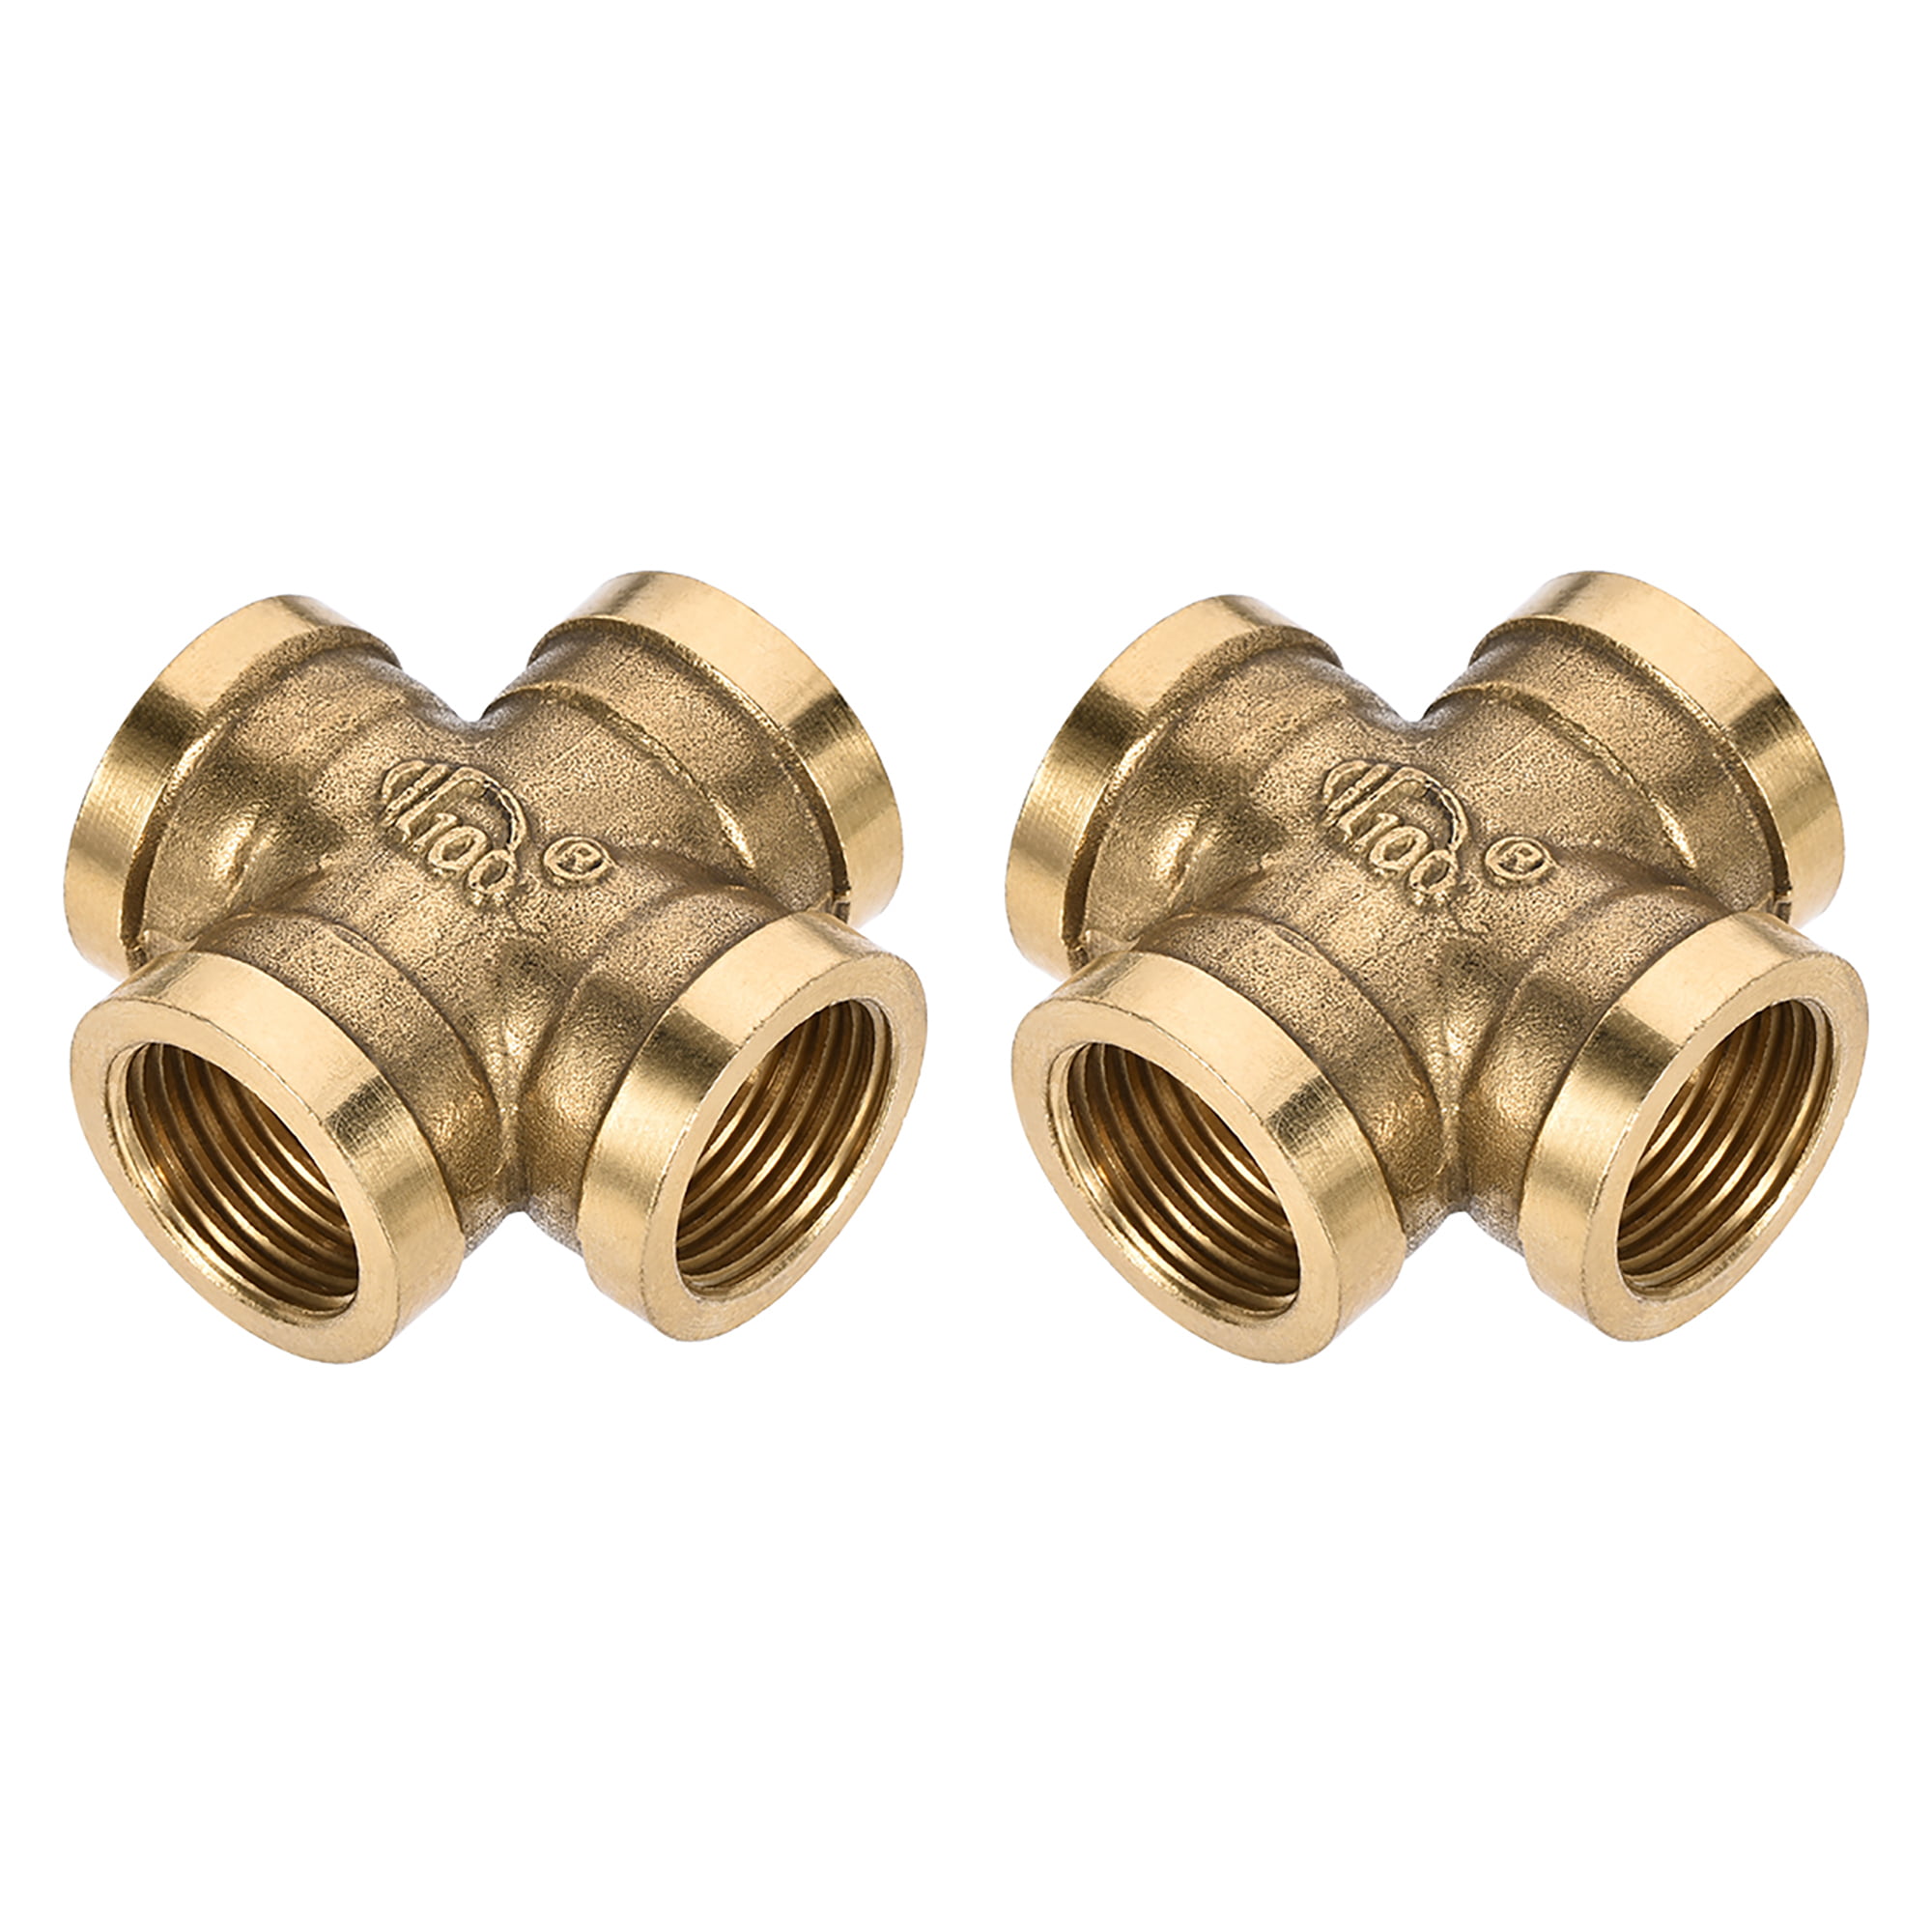 2PCS 1/4" Female BSP Brass Tee 3 Ways Coupler Adapter Fitting Connector Plumbing 